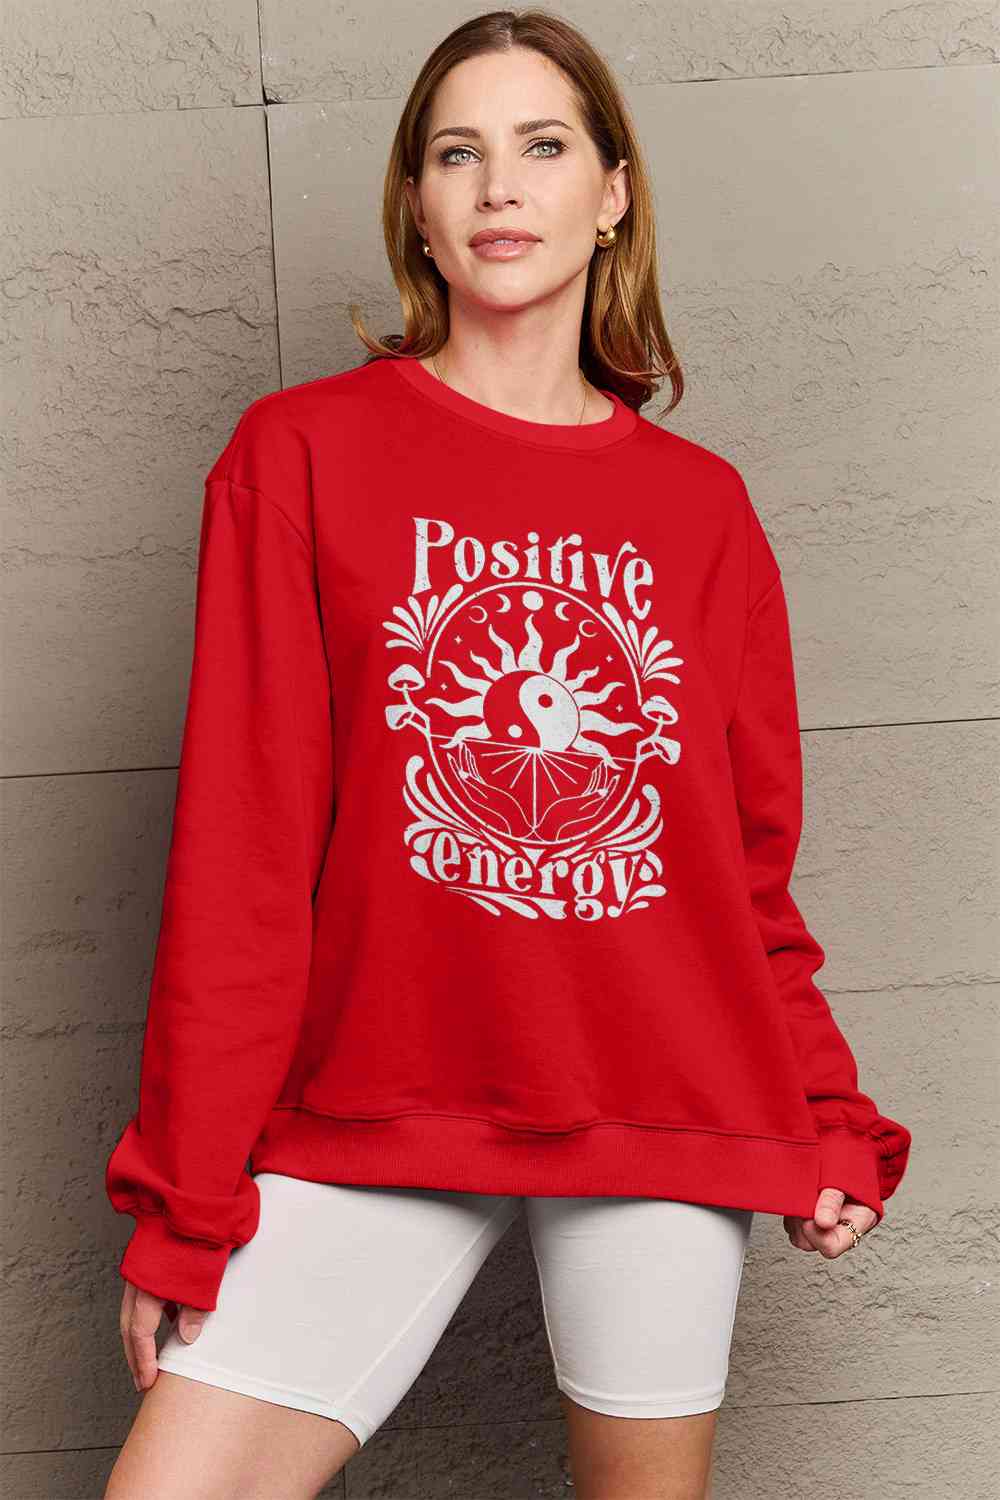 Simply Love Full Size POSITIVE ENERGY Graphic Sweatshirt